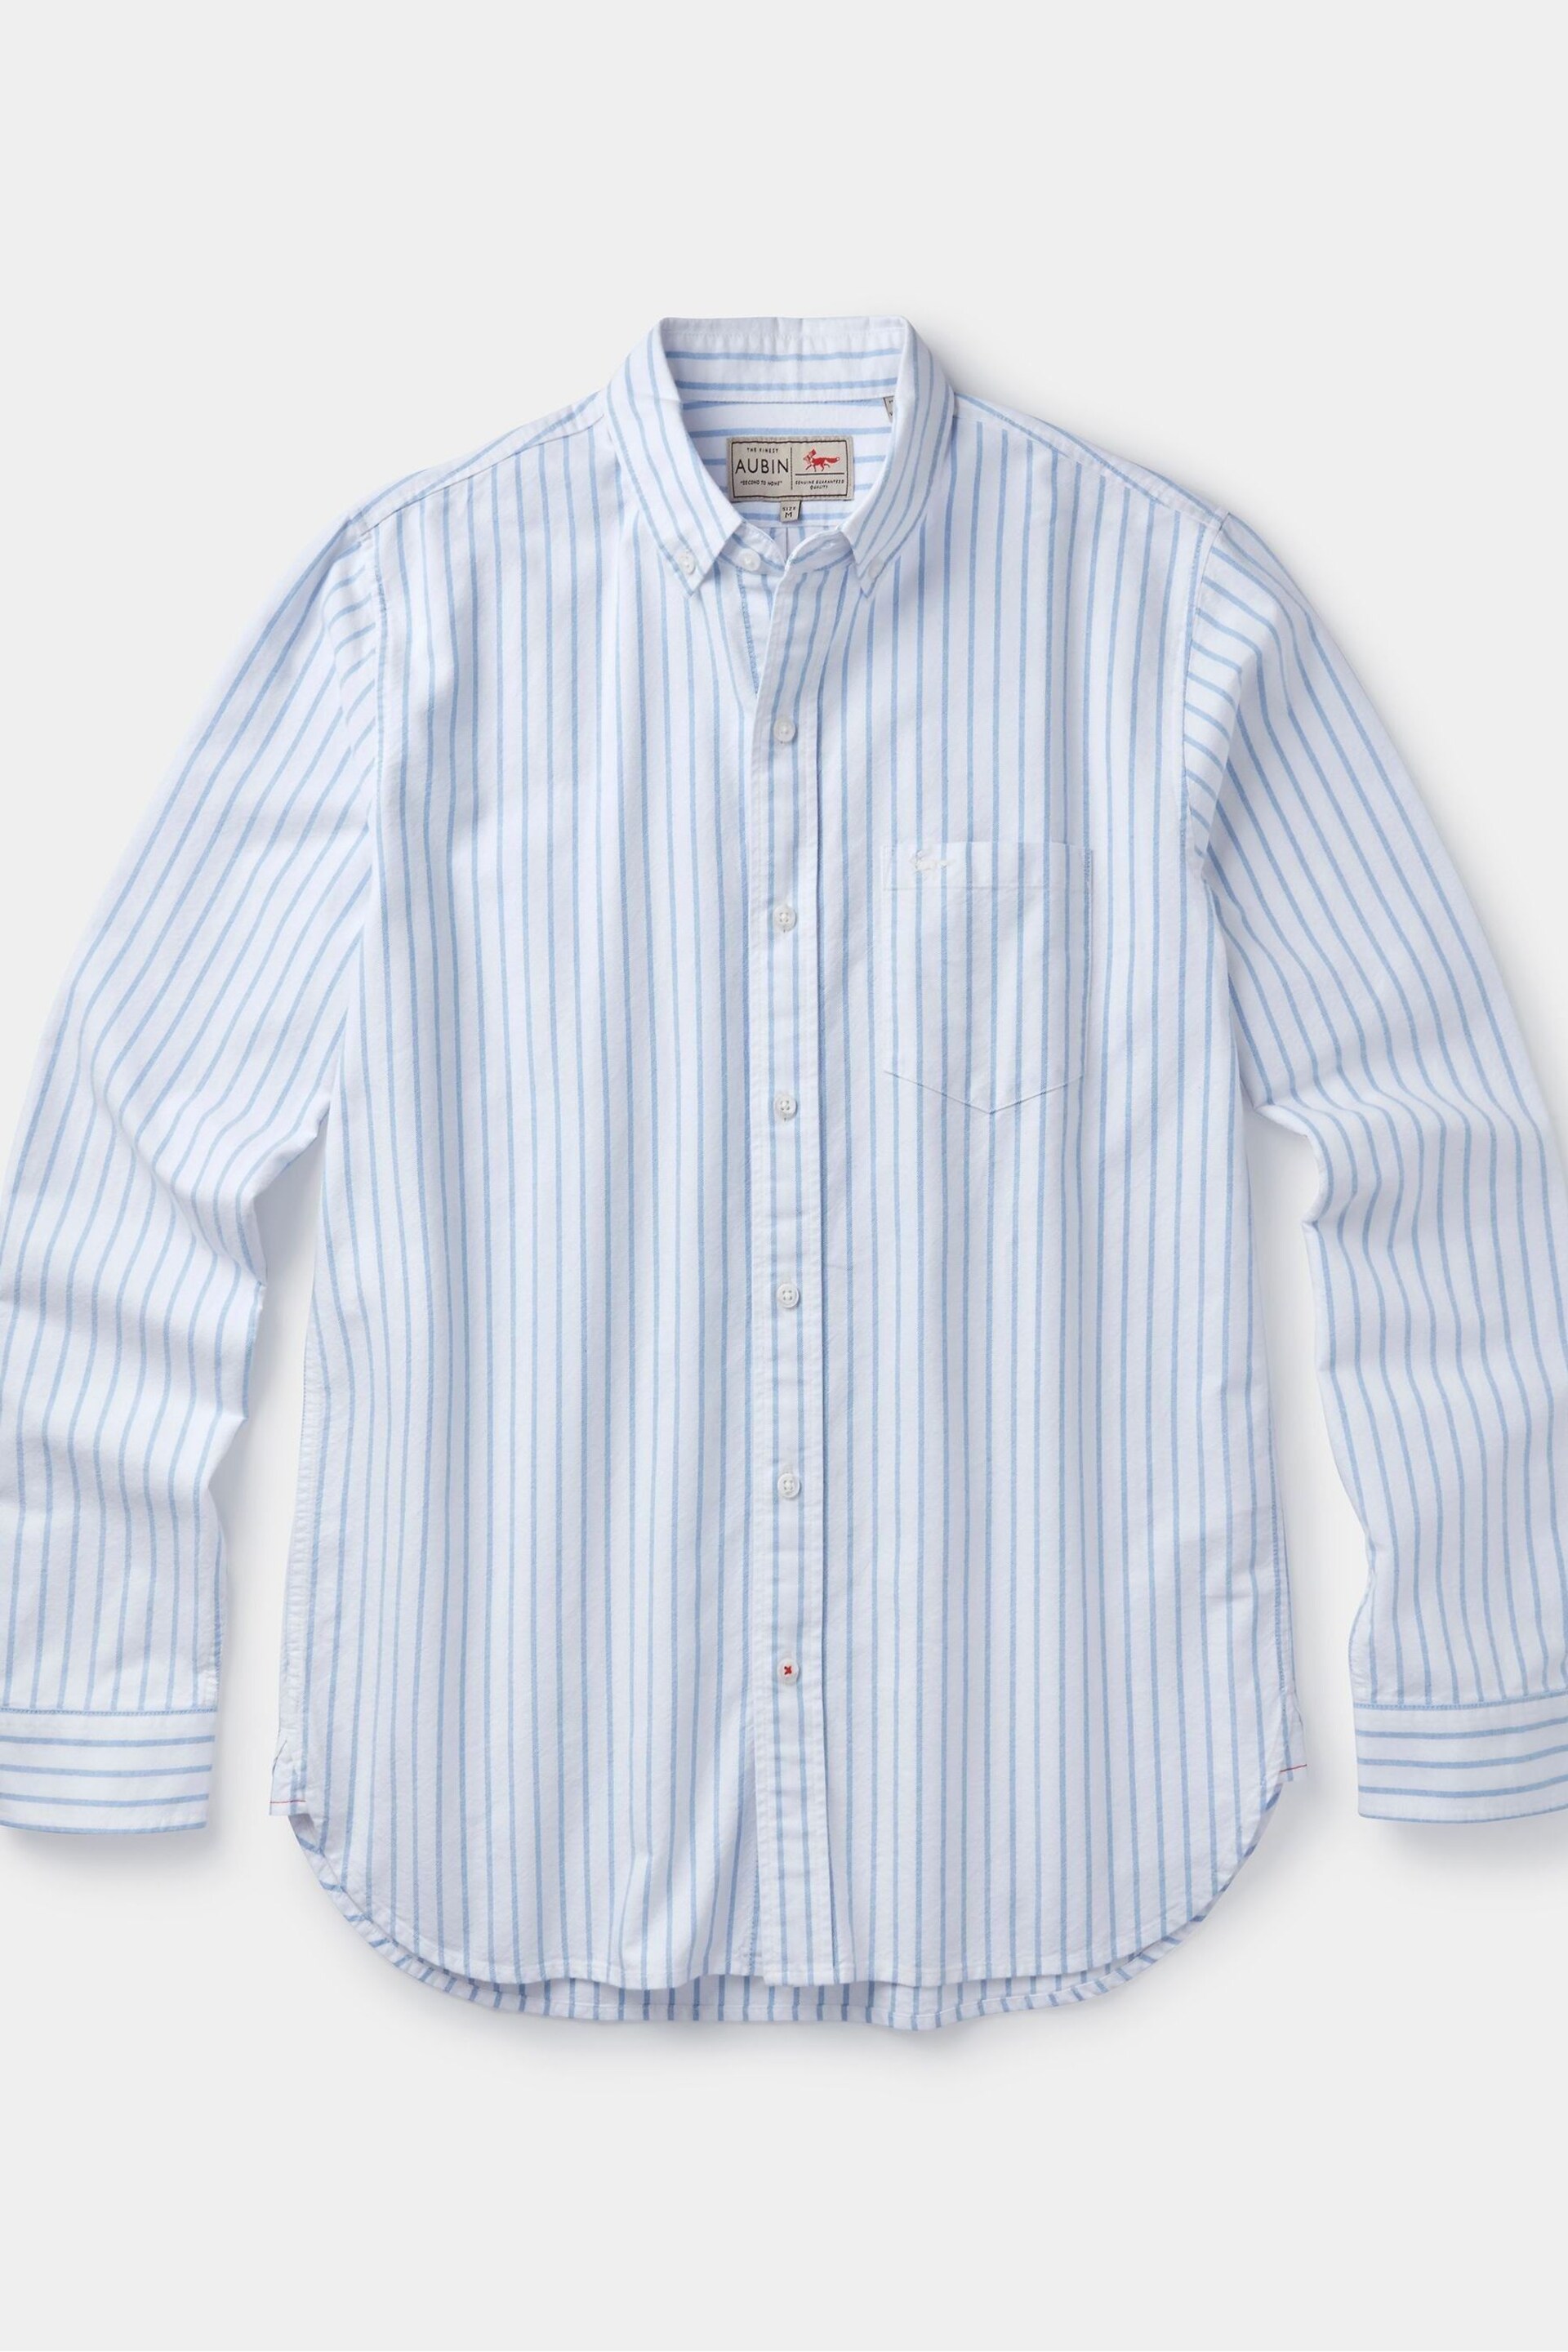 Aubin Aldridge Oxford Button Down Shirt - Image 7 of 8